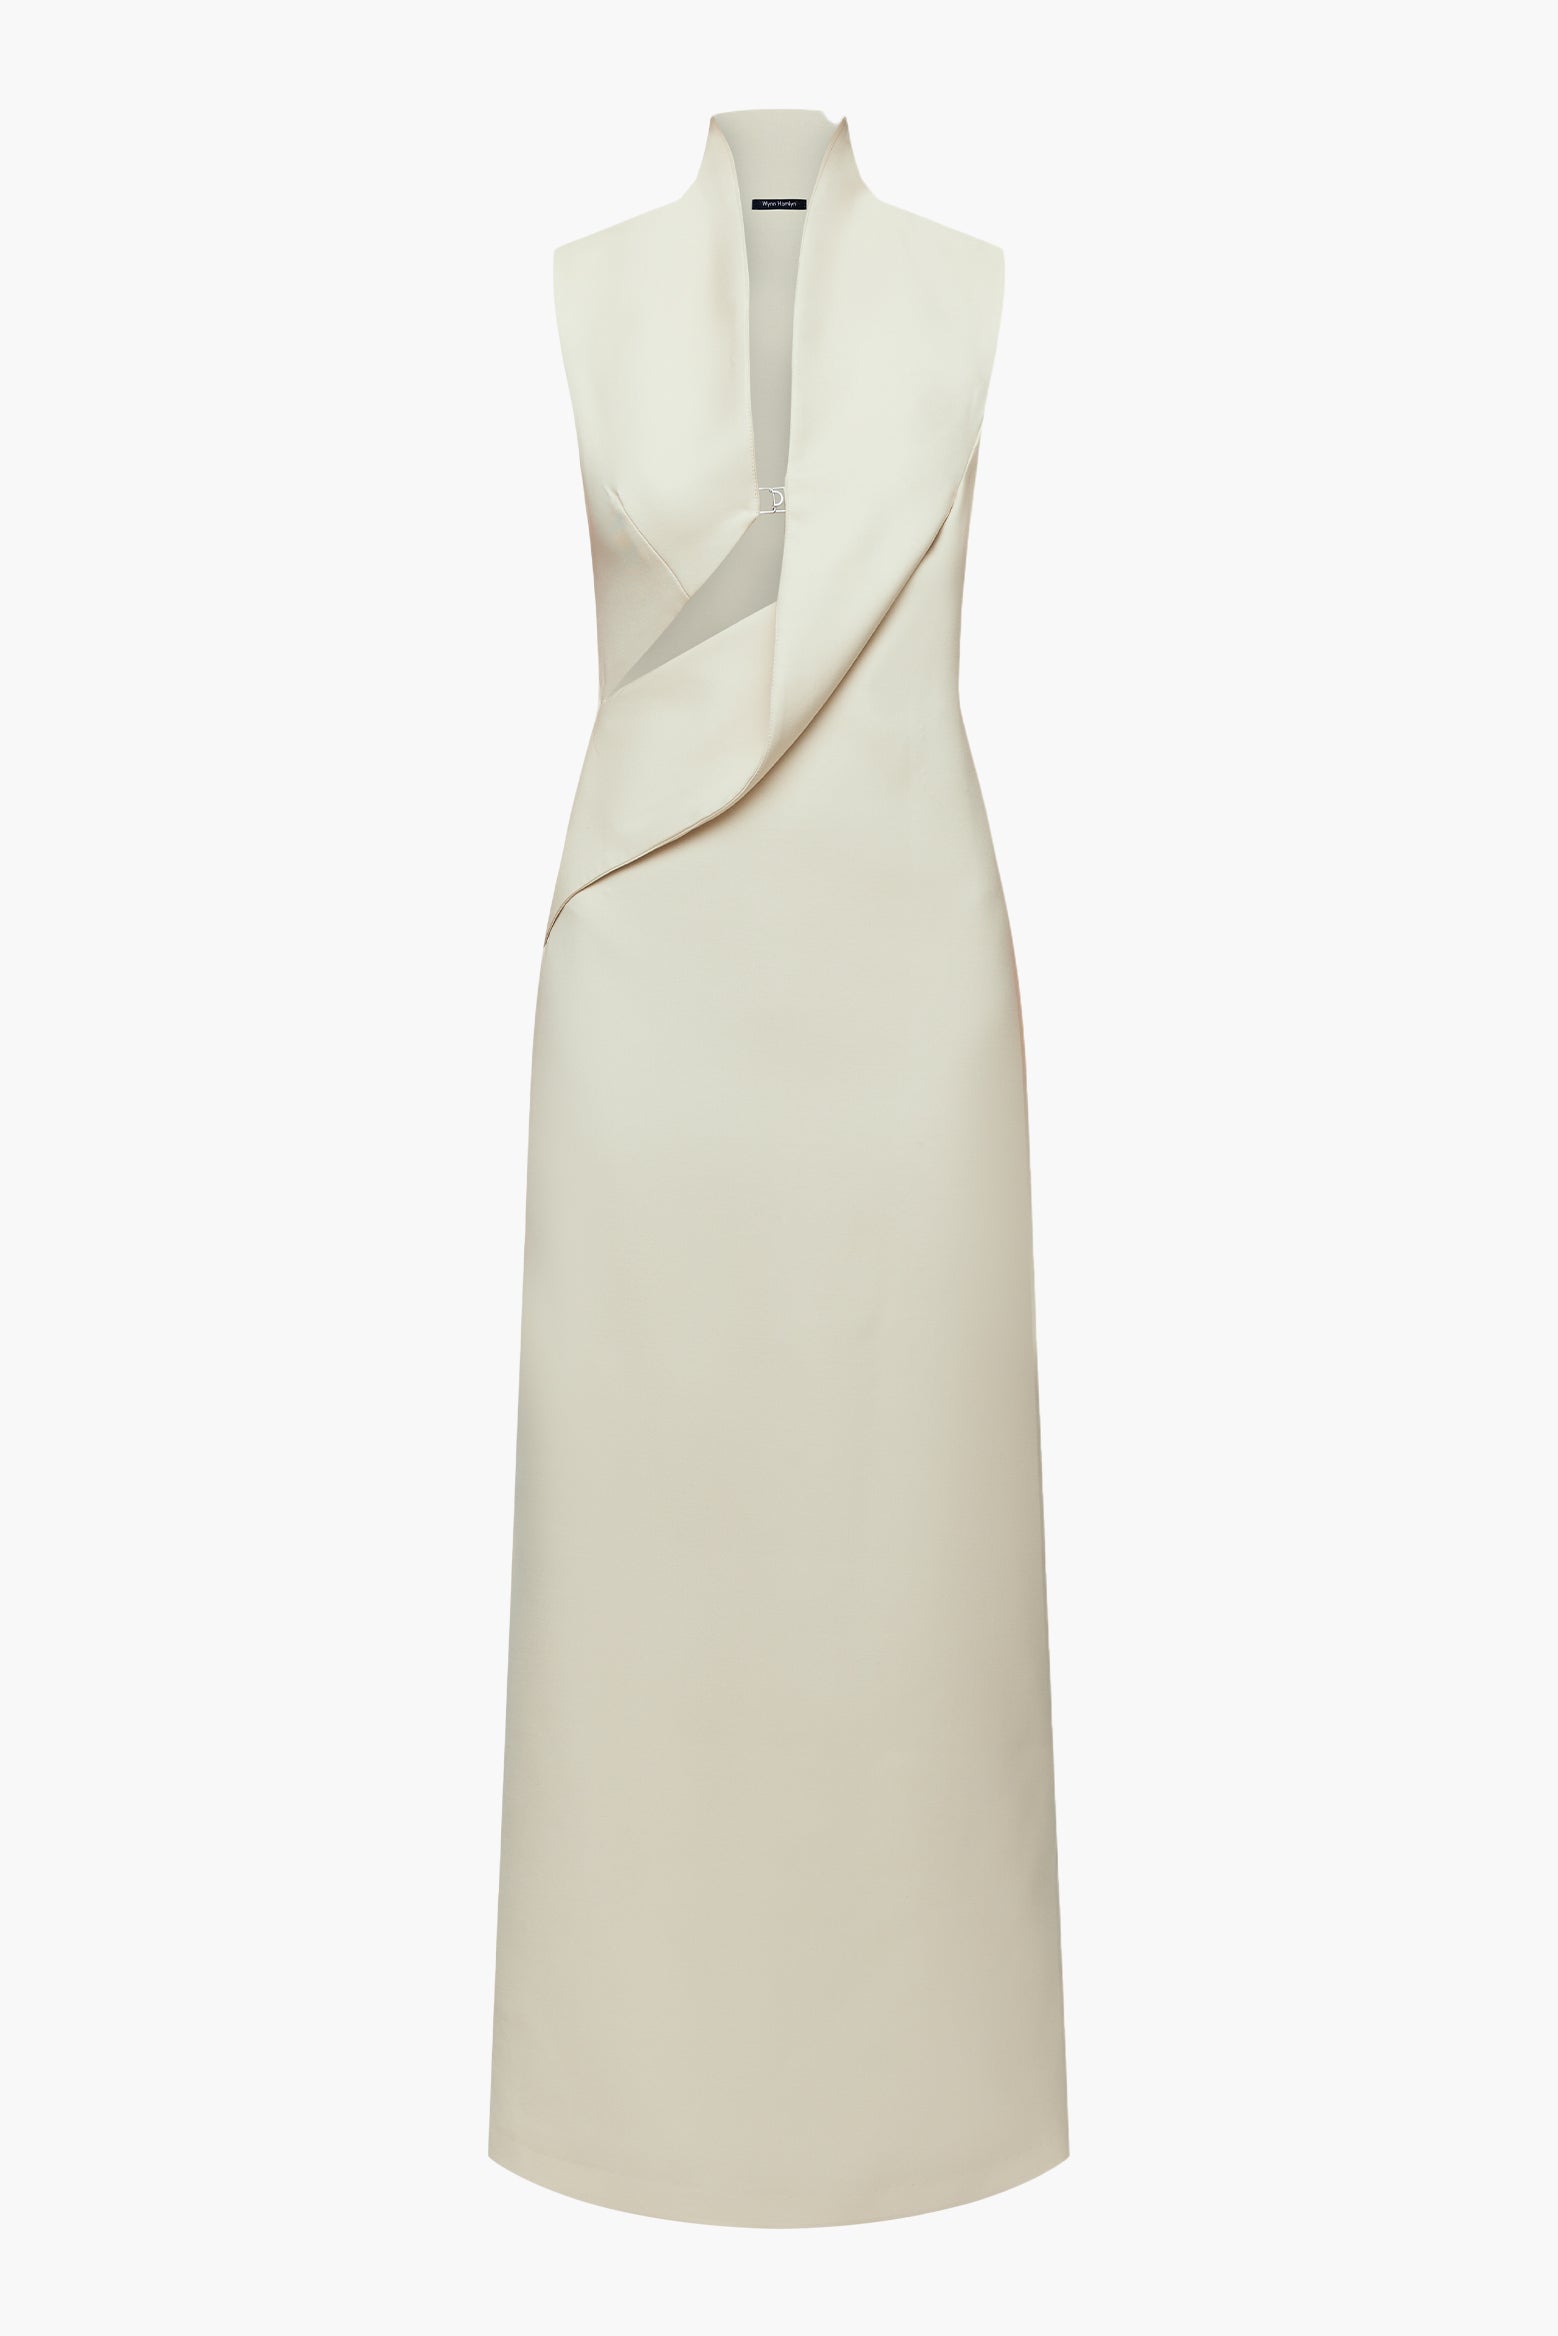 Wynn Hamlyn Harry Dress in Sand available at The New Trend Australia. 